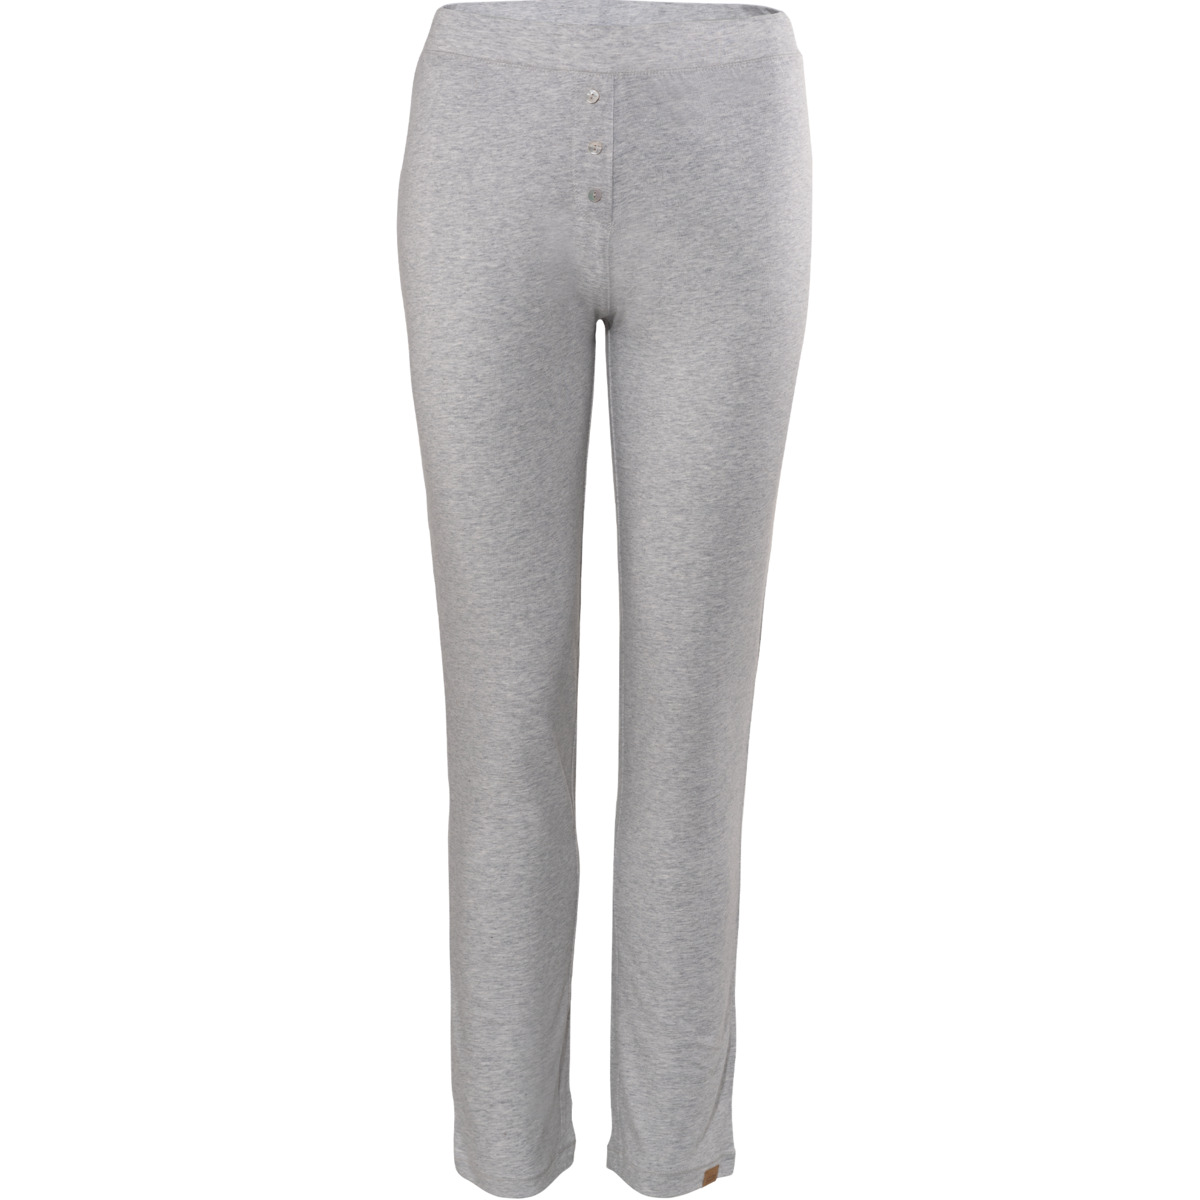 Grey Sleep trousers, CAROL